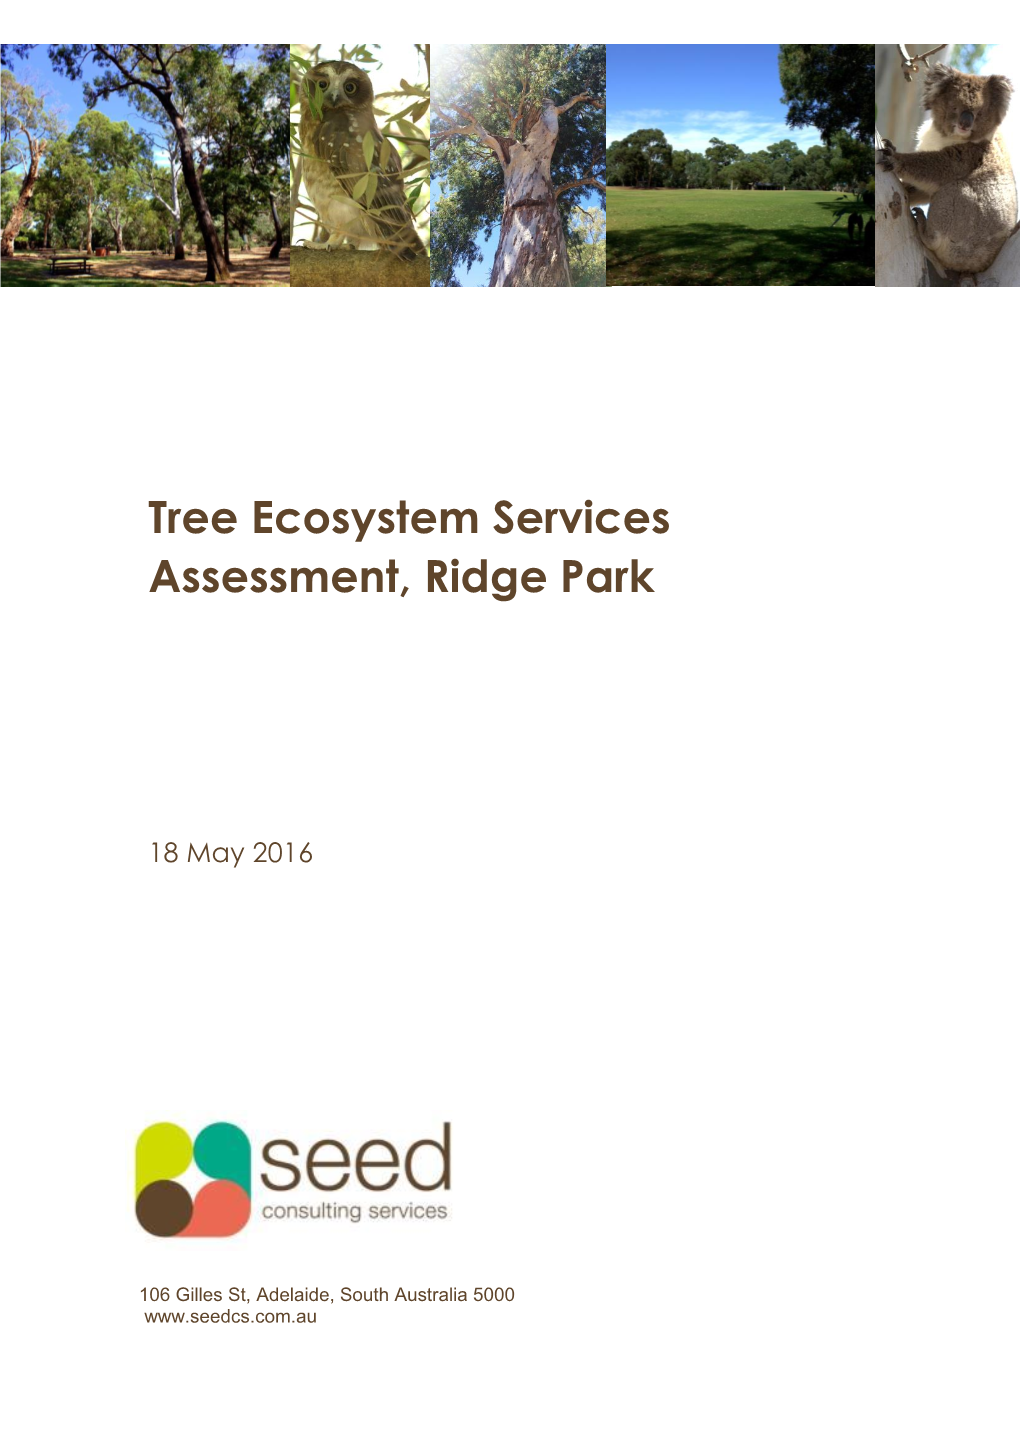 Tree Ecosystem Services Assessment, Ridge Park